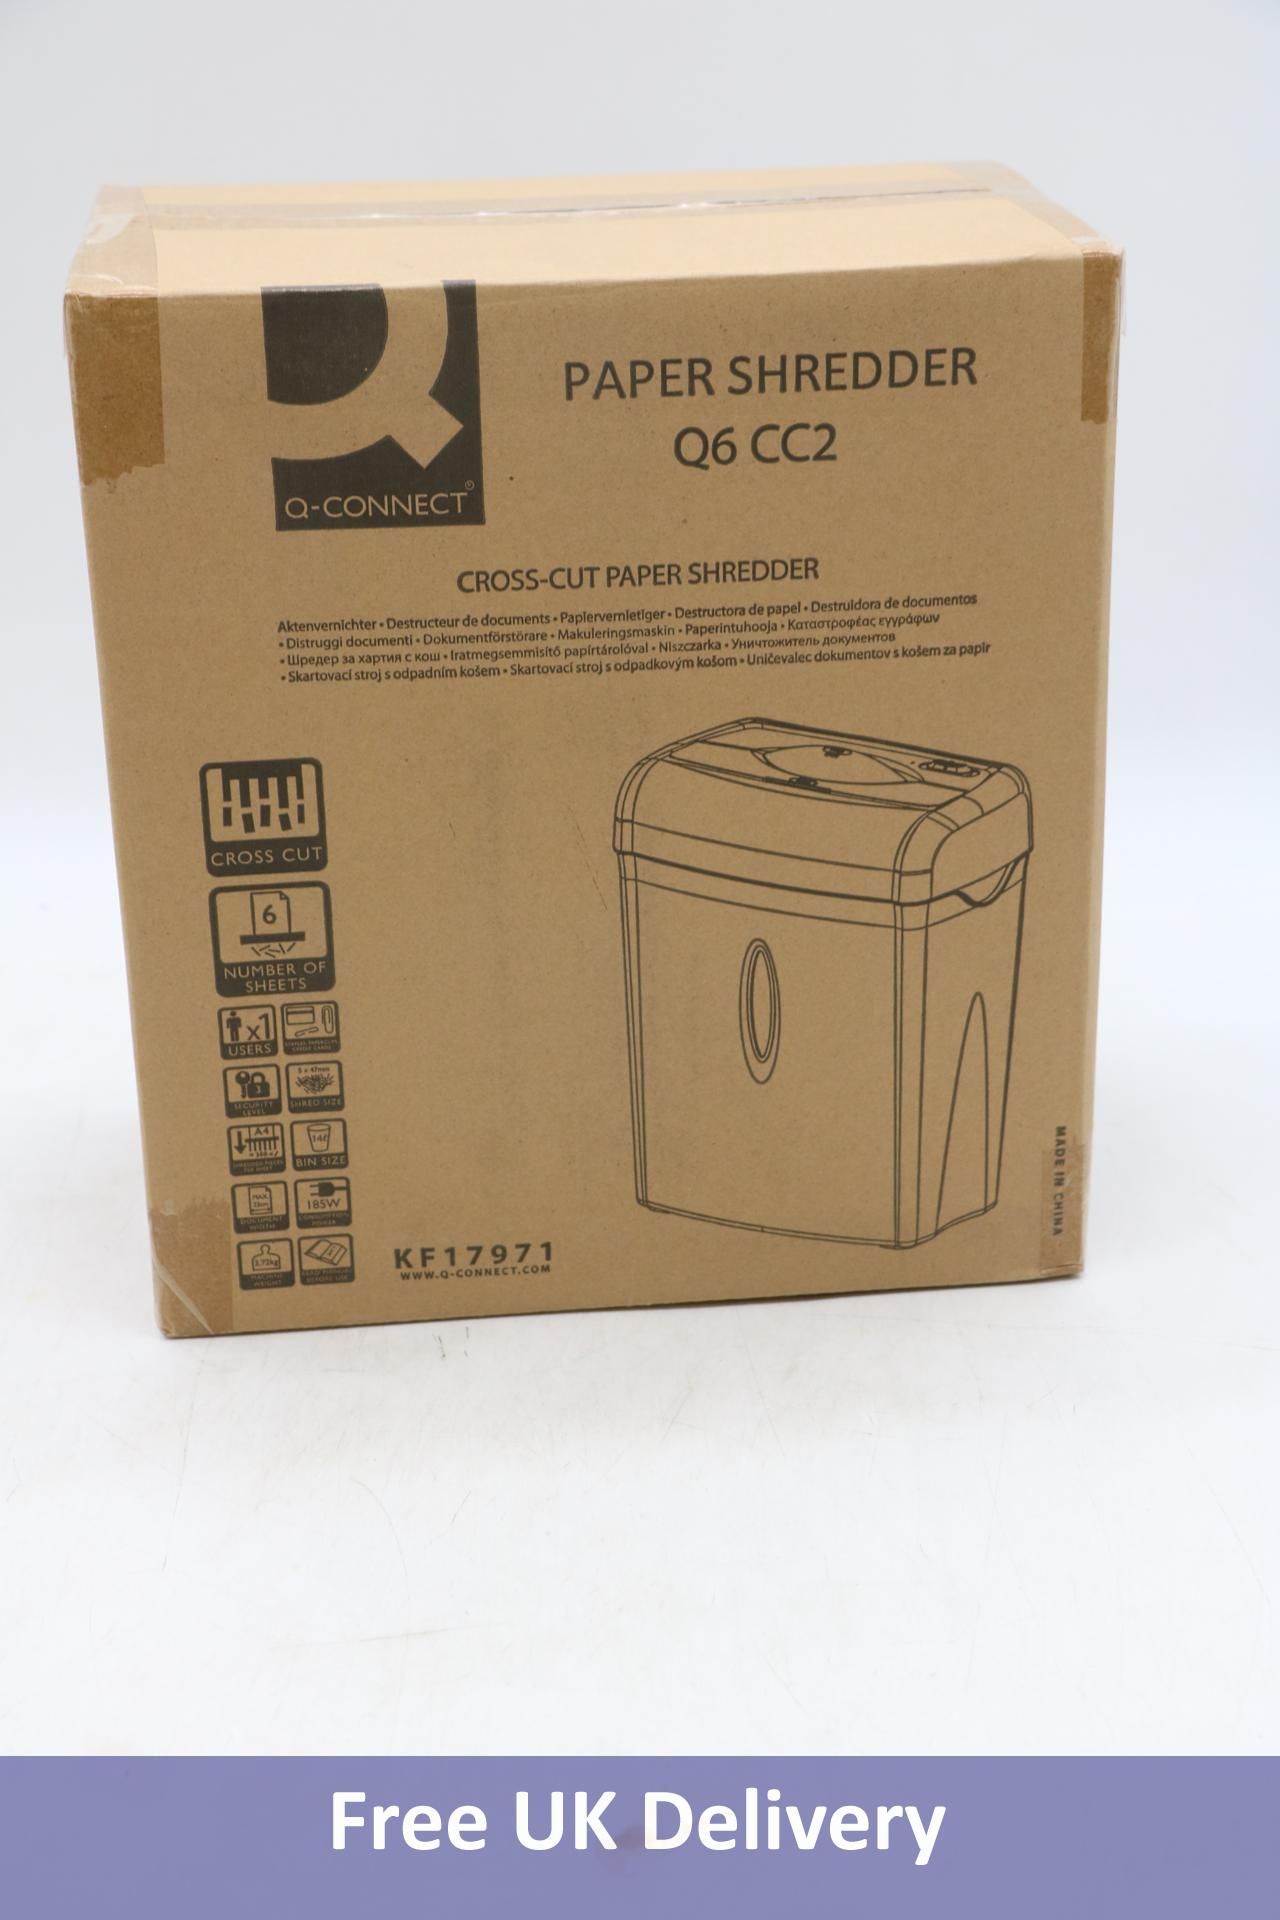 Q-Connect Q6CC2 Cross Cut Paper Shredder